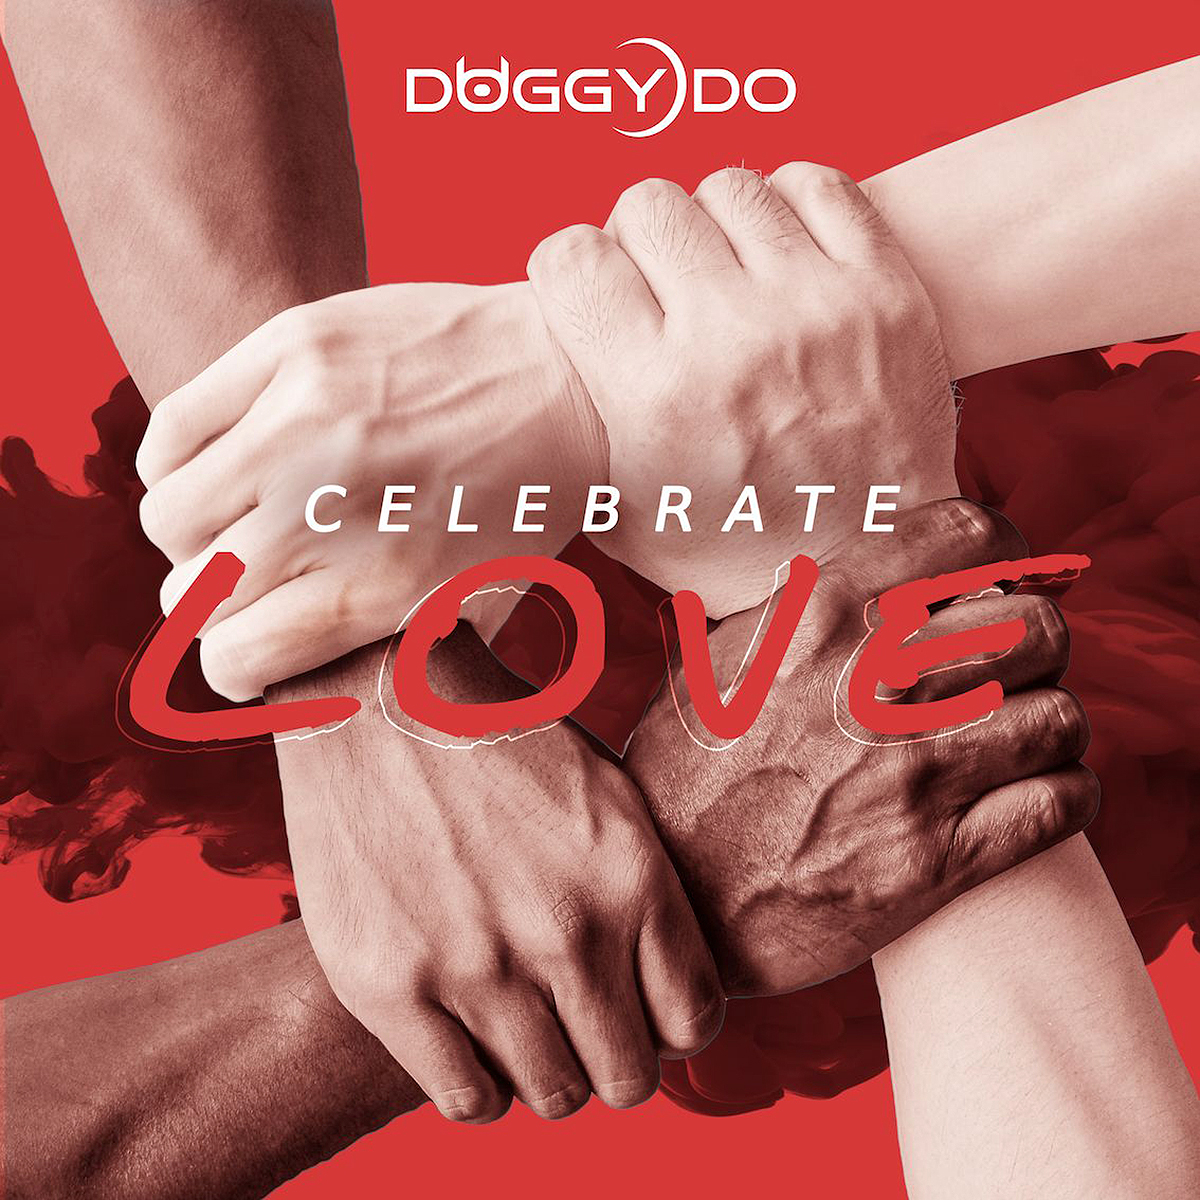 Doggy.do | Celebrate Love